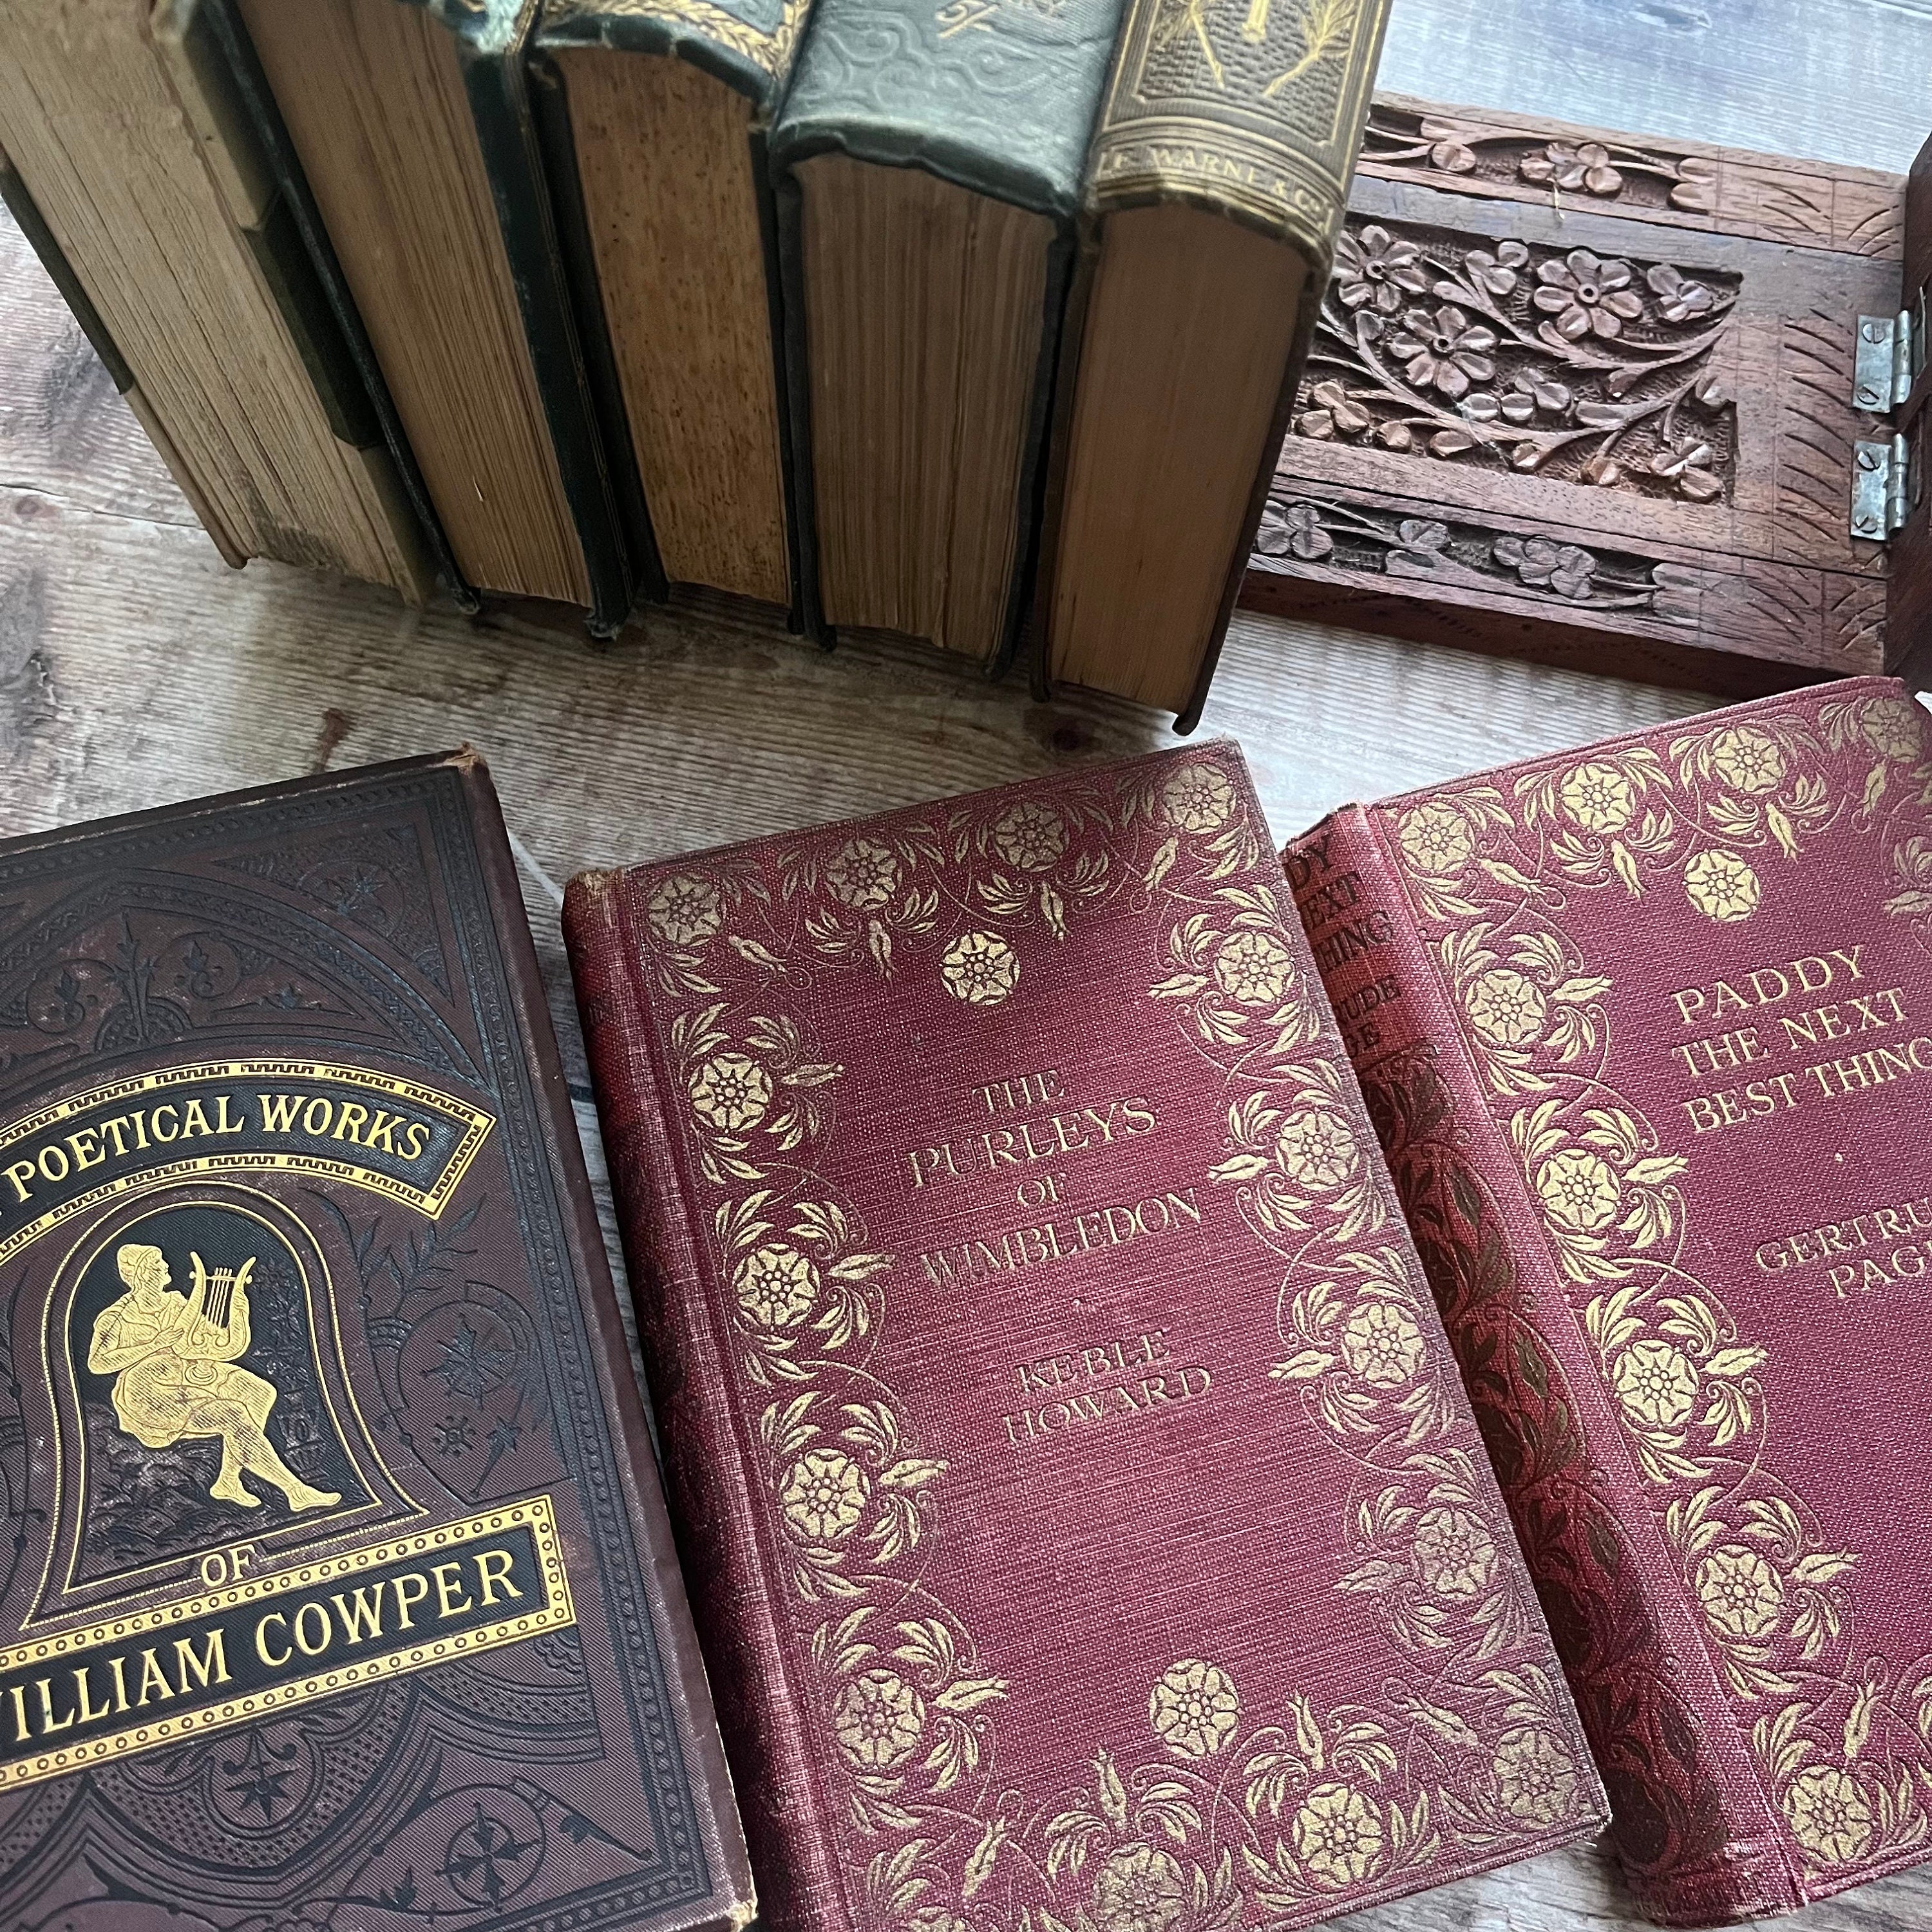 Adopt an Antique Book Worn Loved Hardback Books Vintage Book for